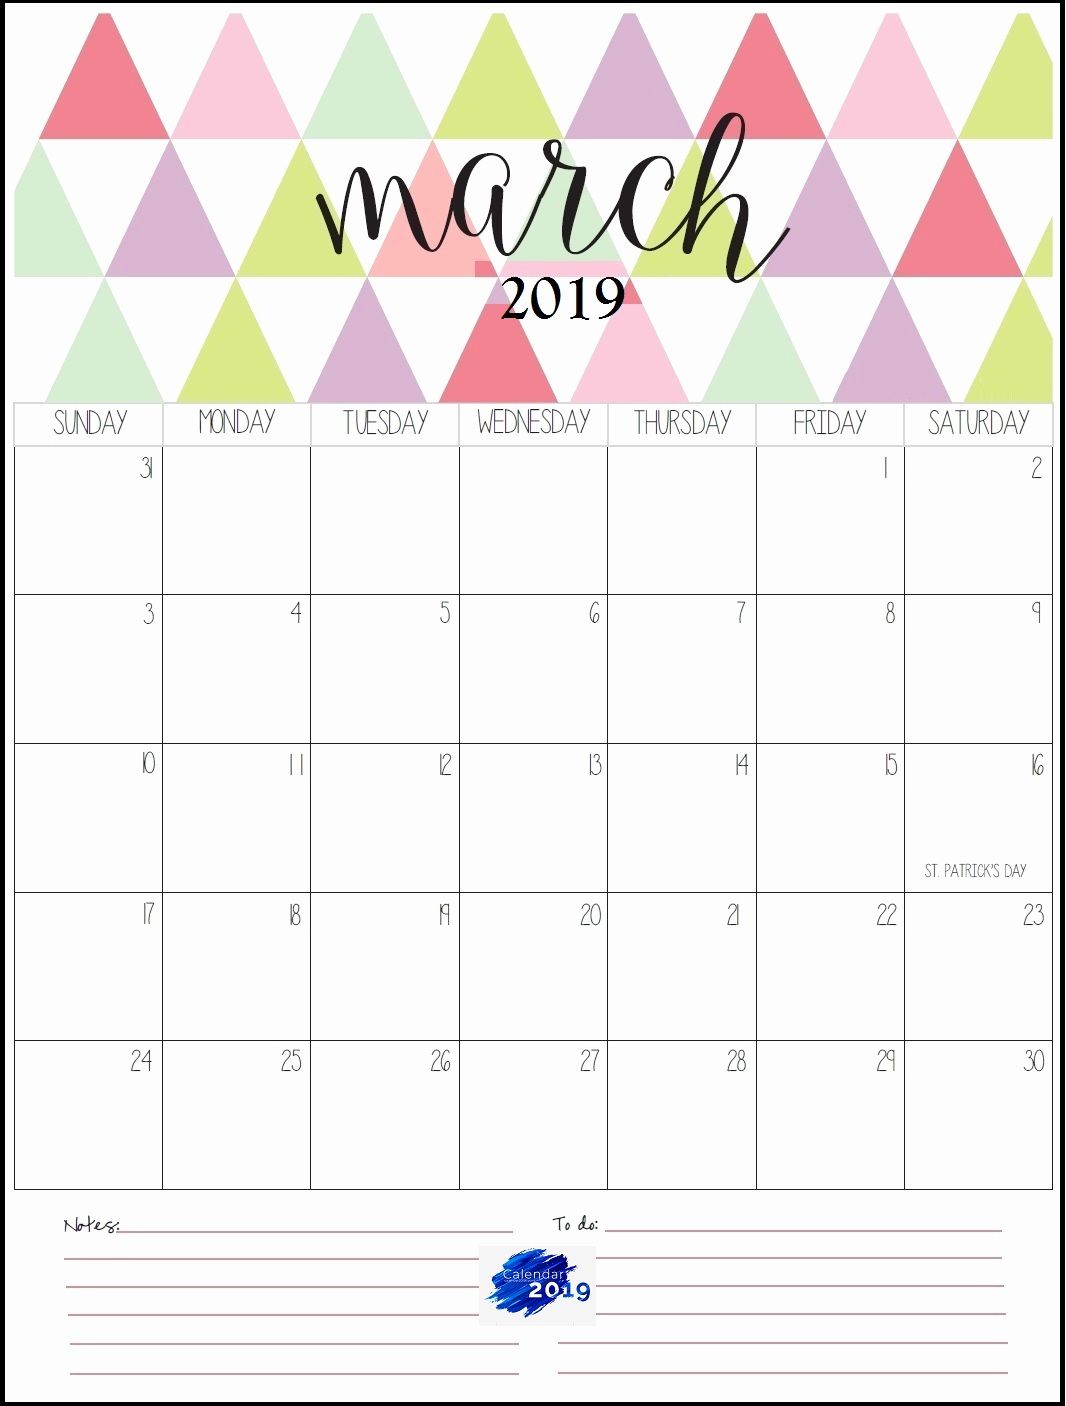 Cute March Calendar Floral Wallpaper Desk Image